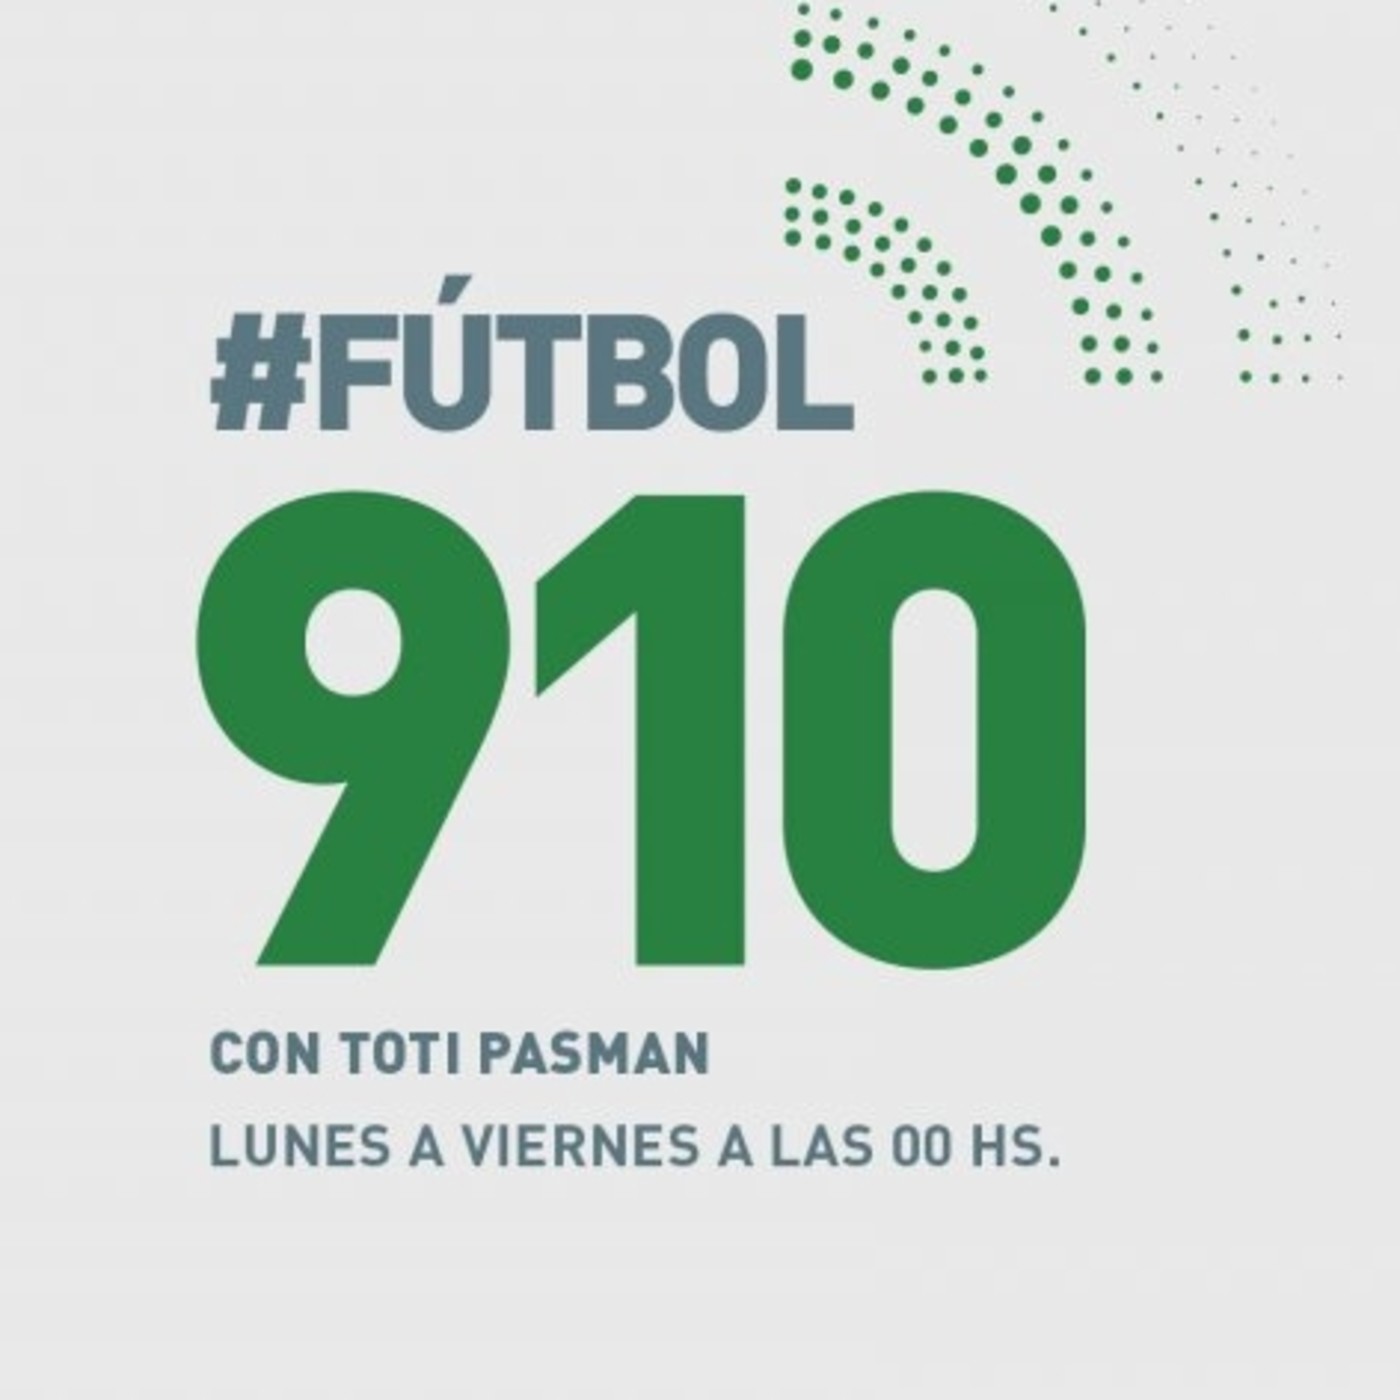 Futbol 910 con toti pasman